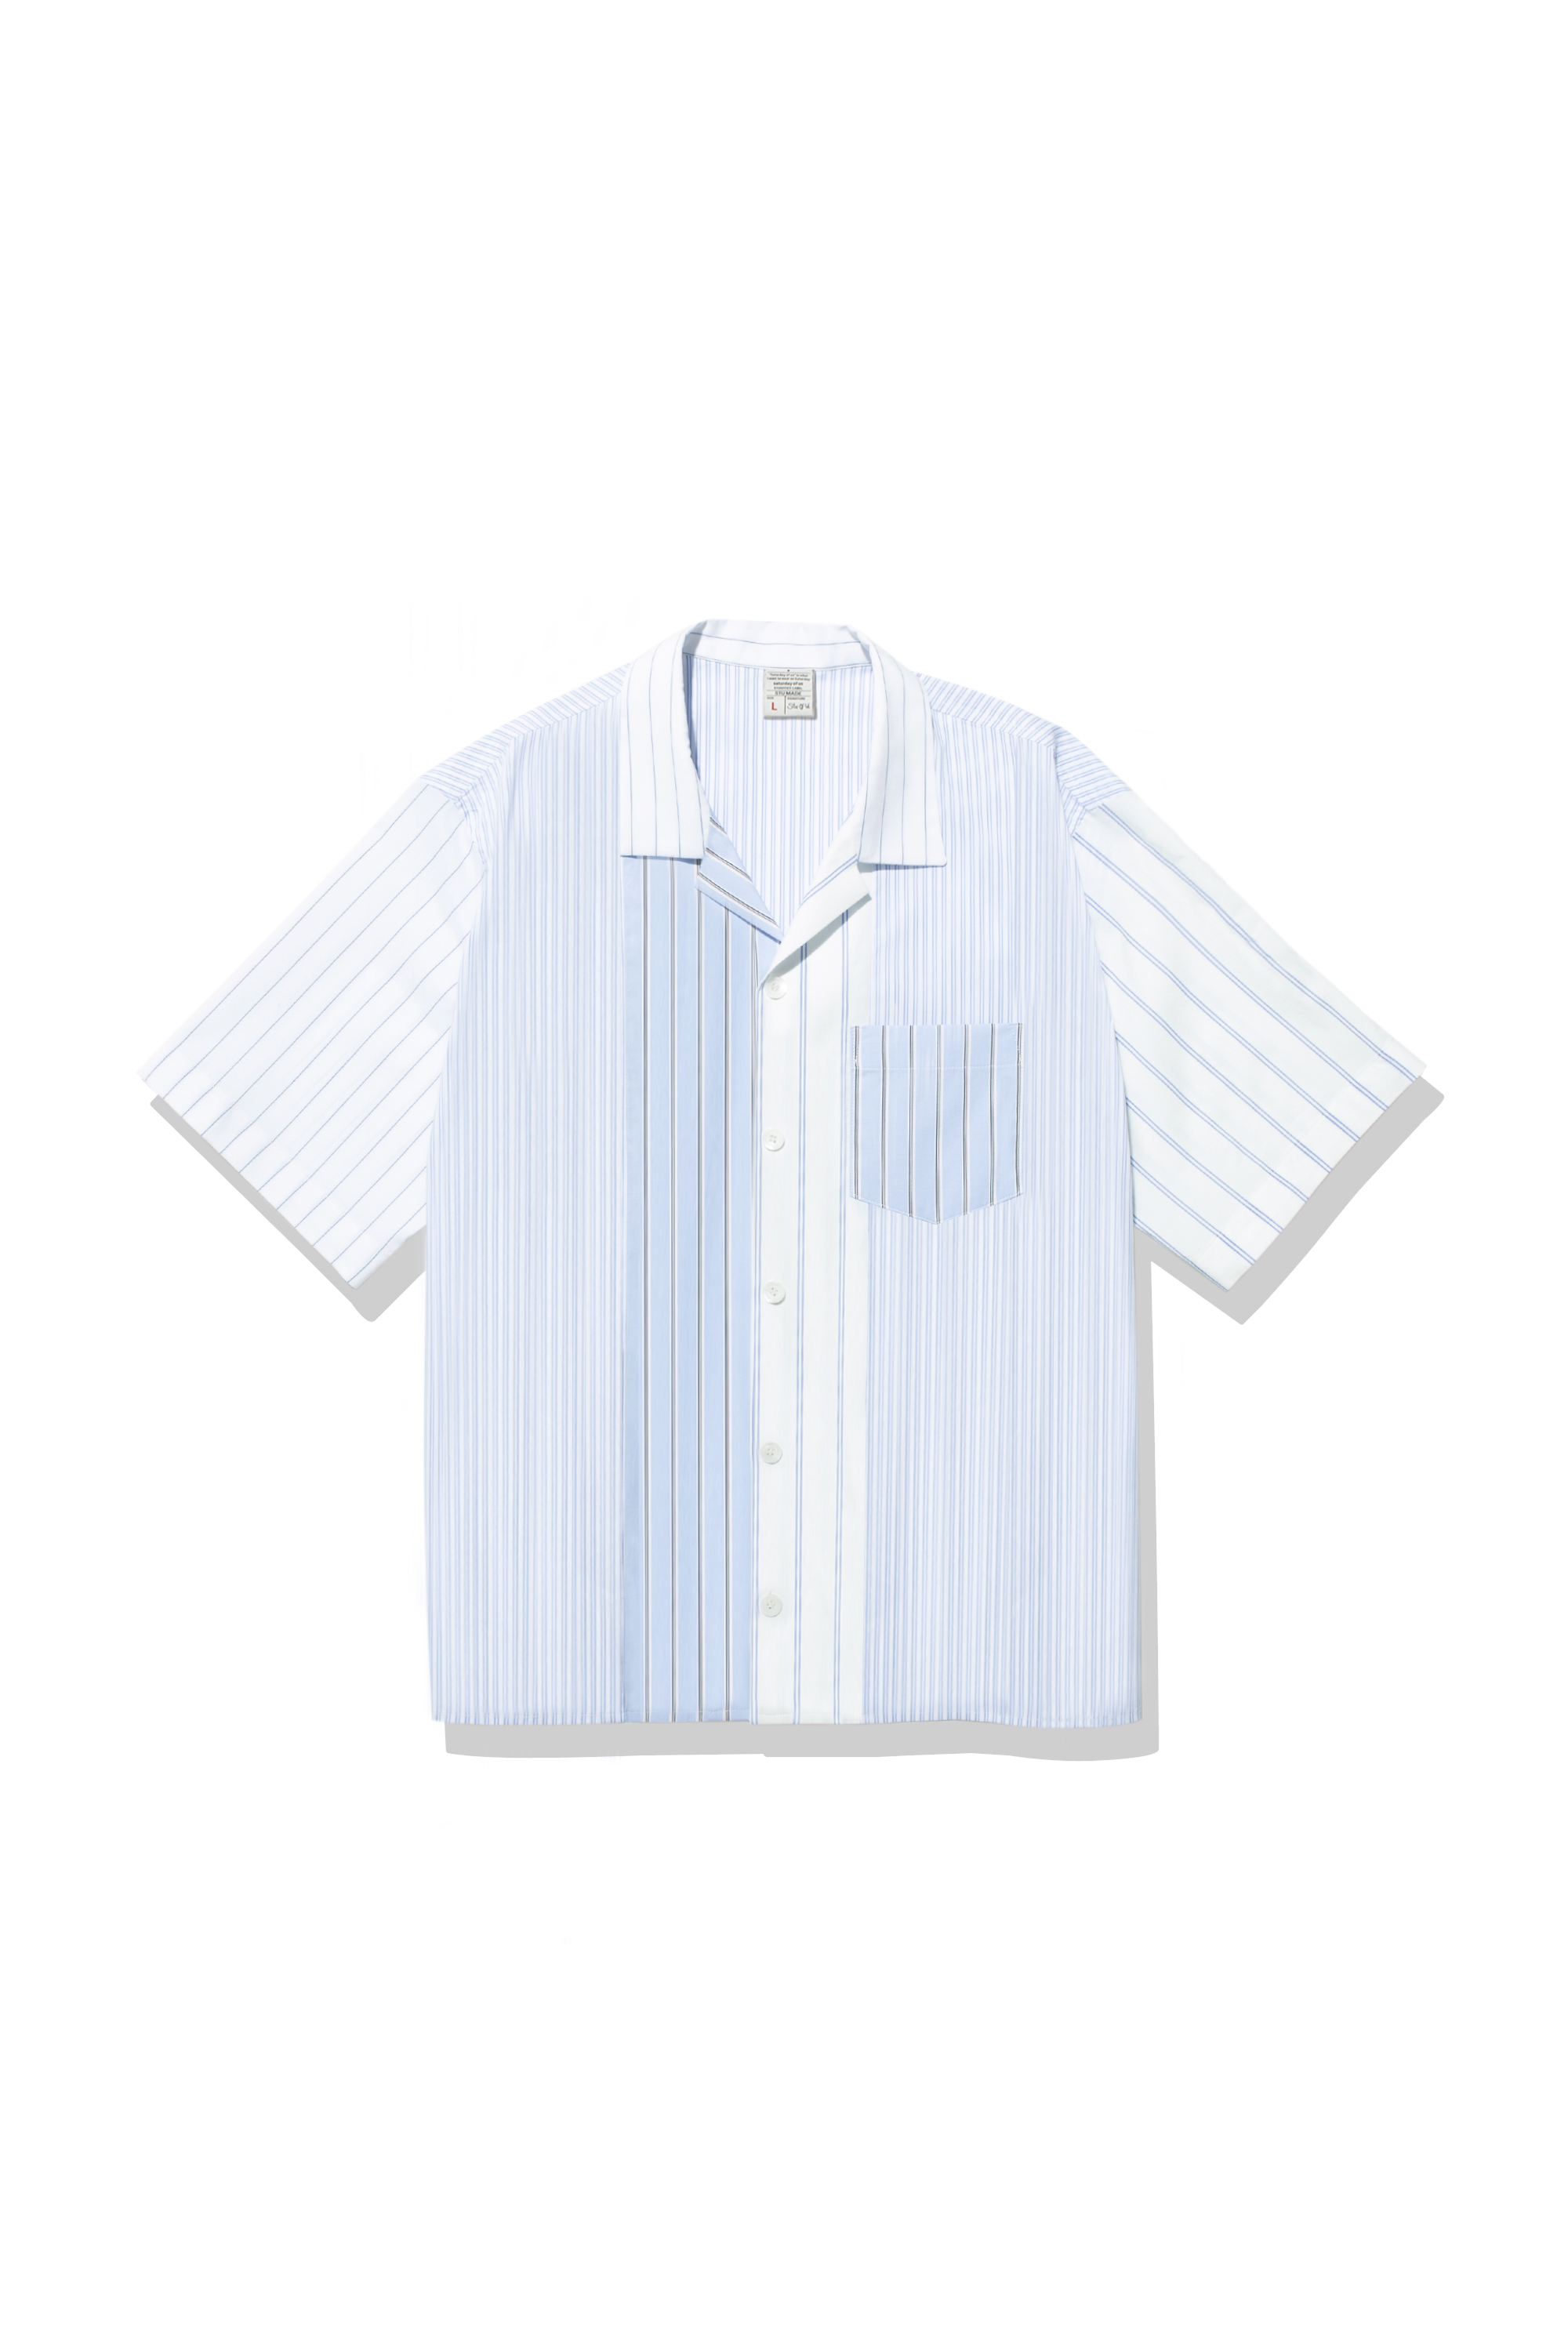 Multi Stripe Shirt (6월 9일 순차 발송)